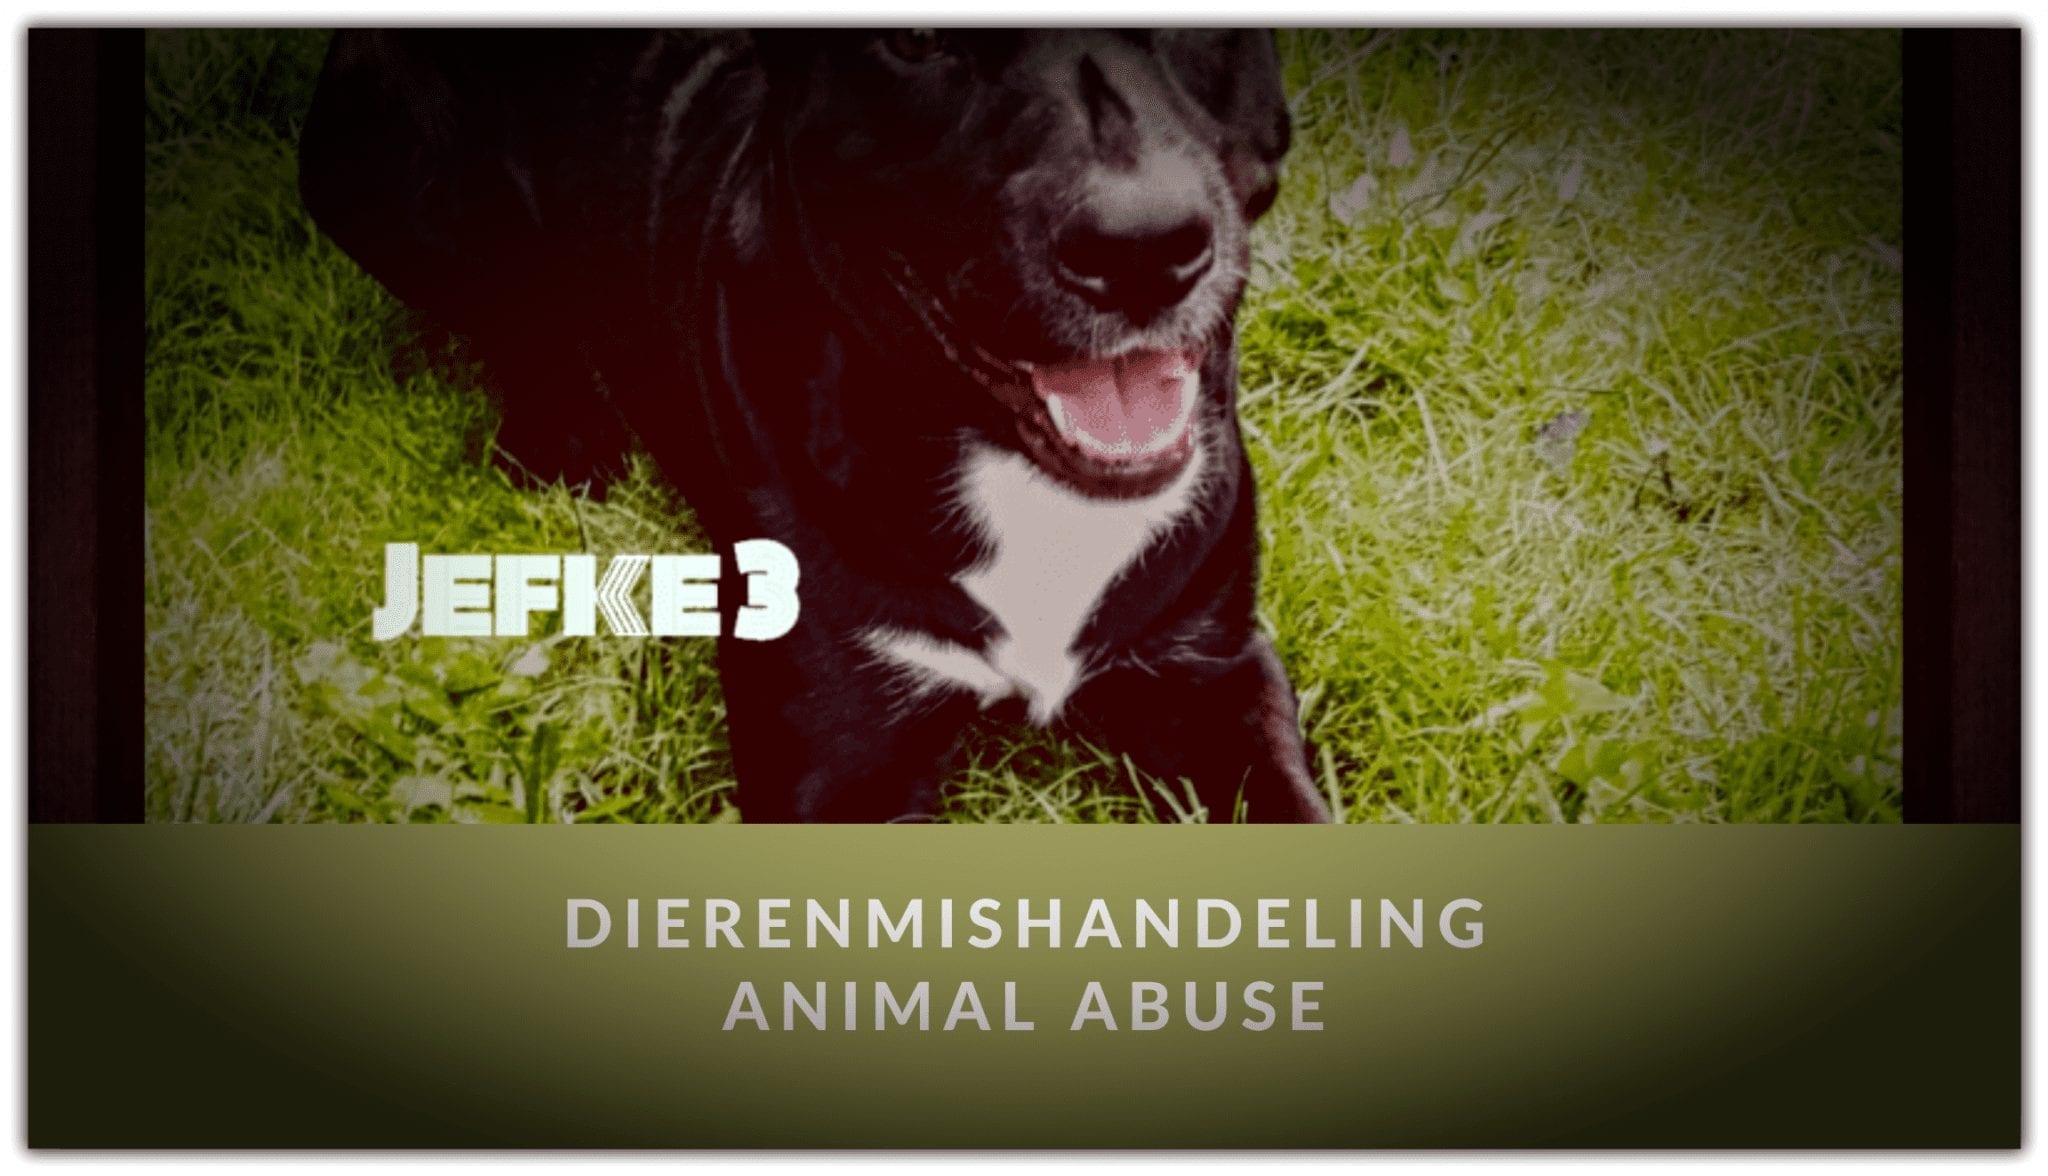 DIERENMISHANDELING || ANIMAL ABUSE